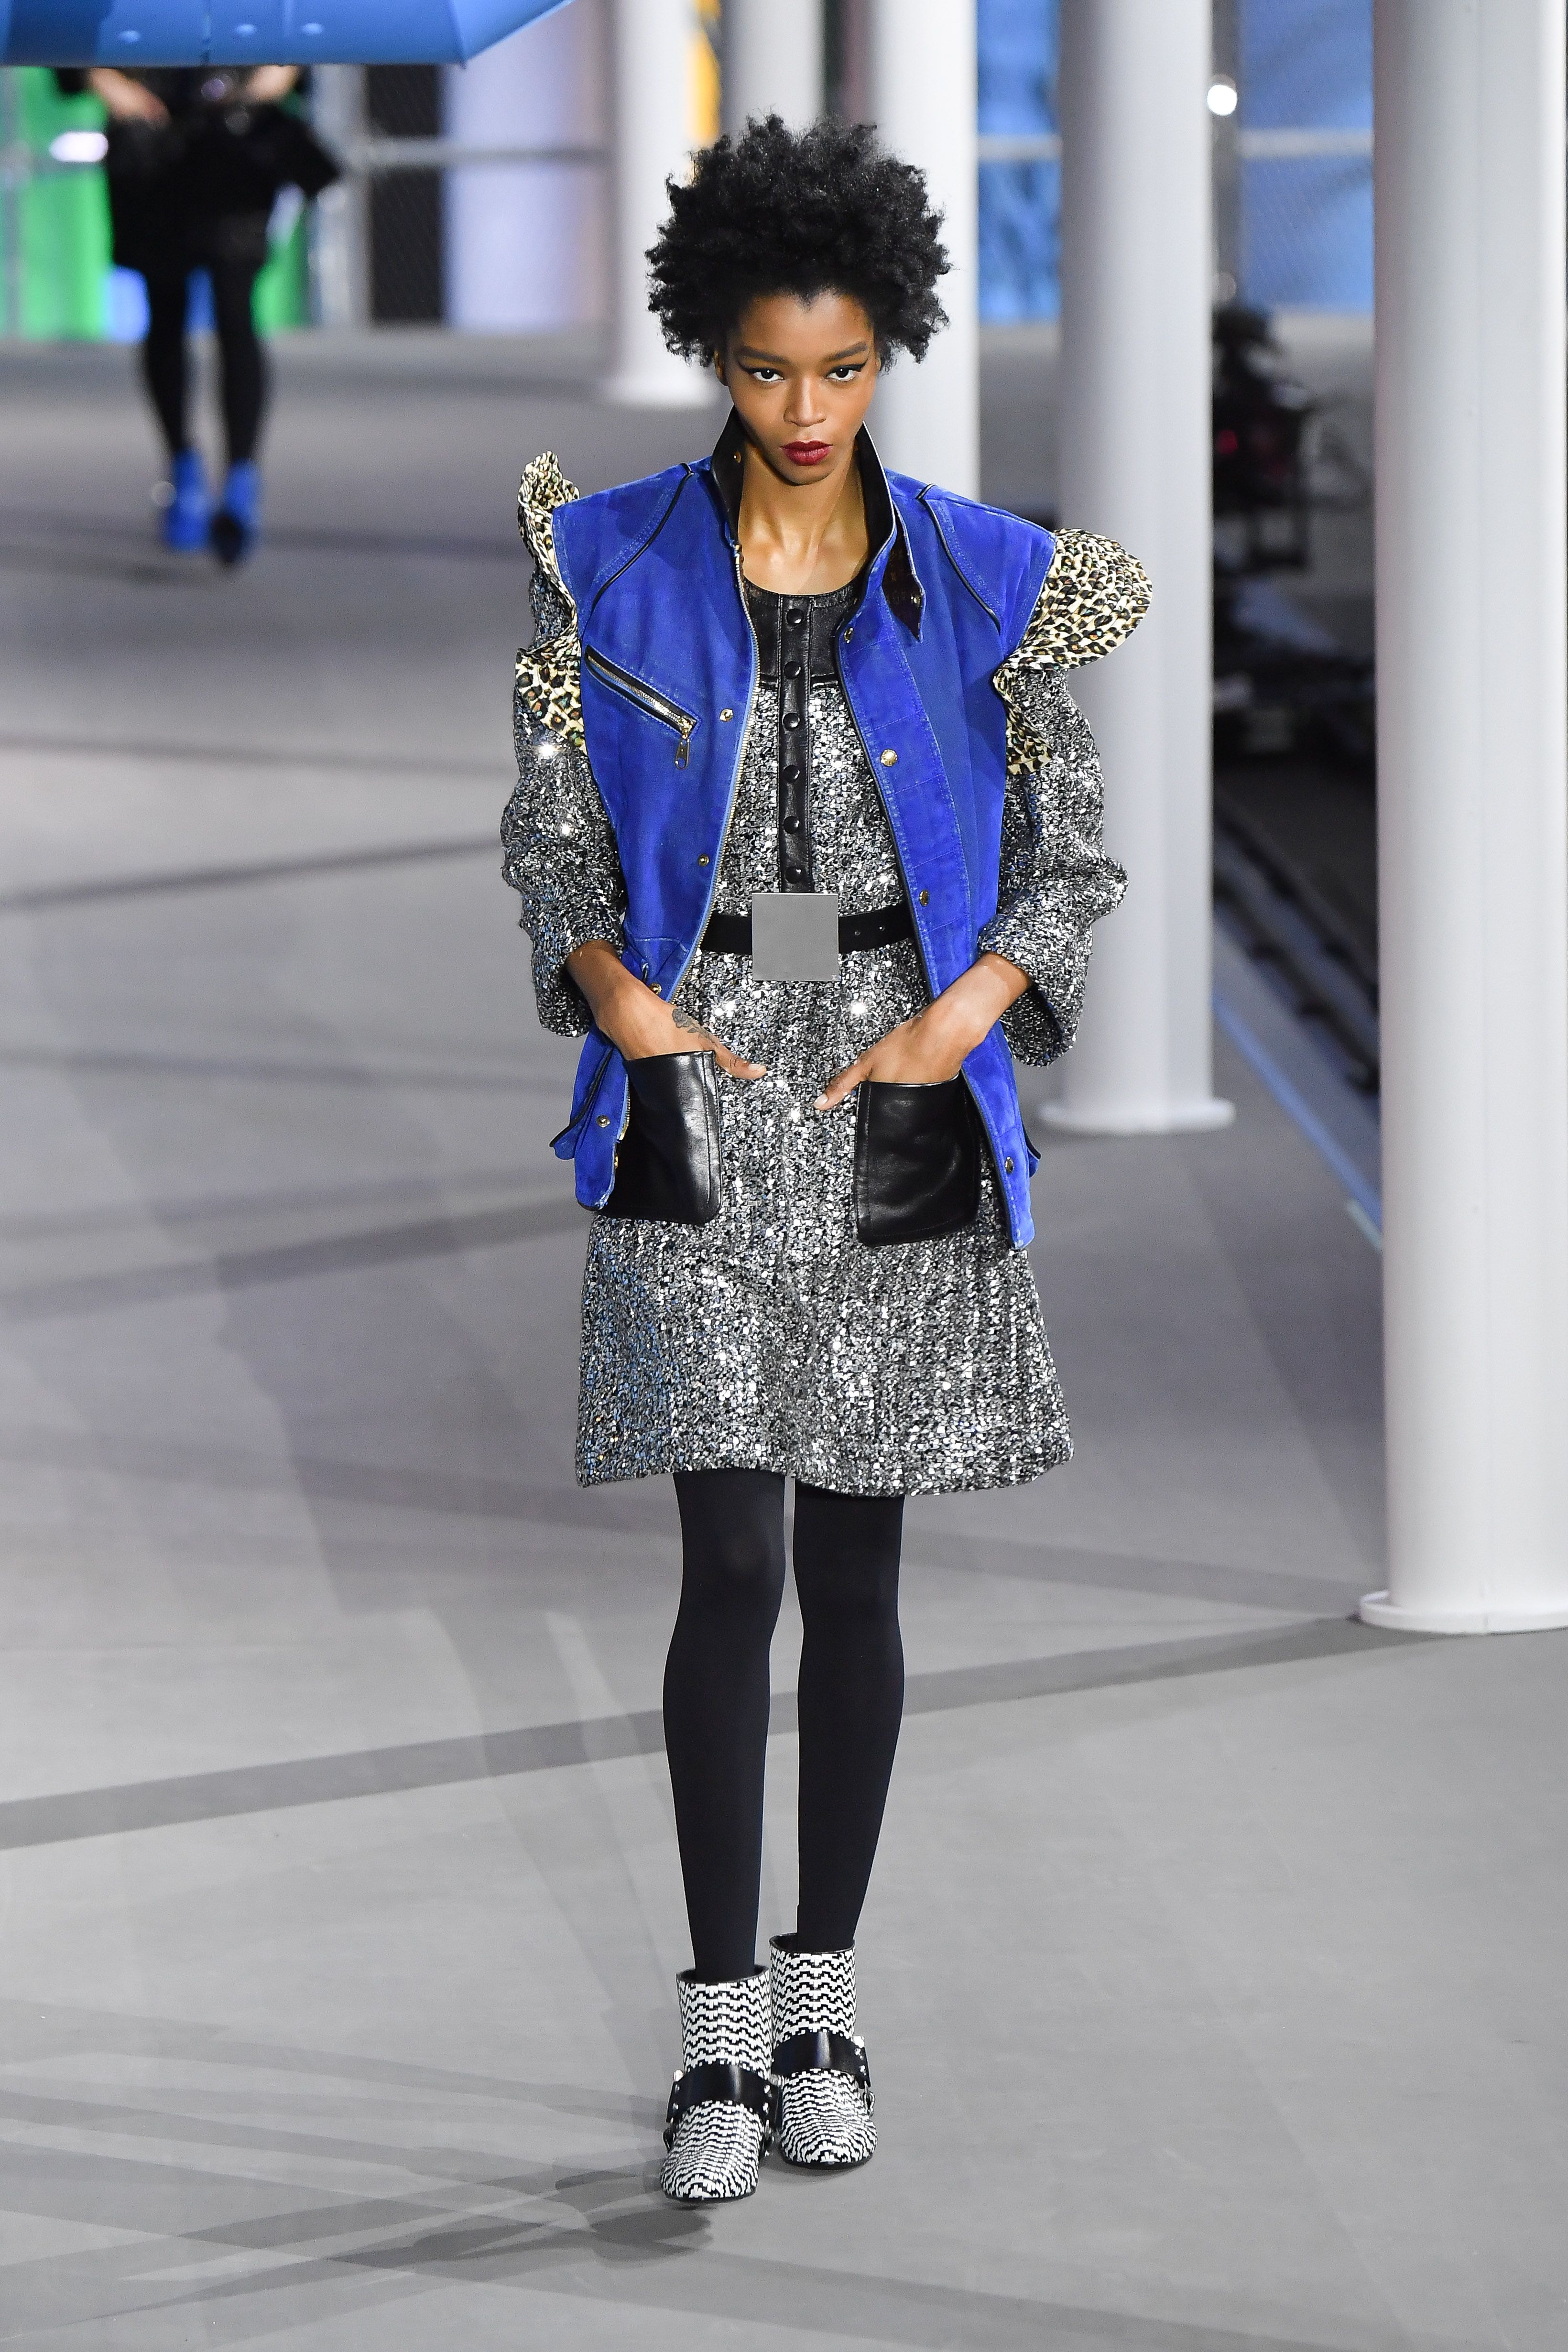 At Louis Vuitton, Nicolas Ghesquière Defines the Silhouettes for Fall 2015  - Fashionista